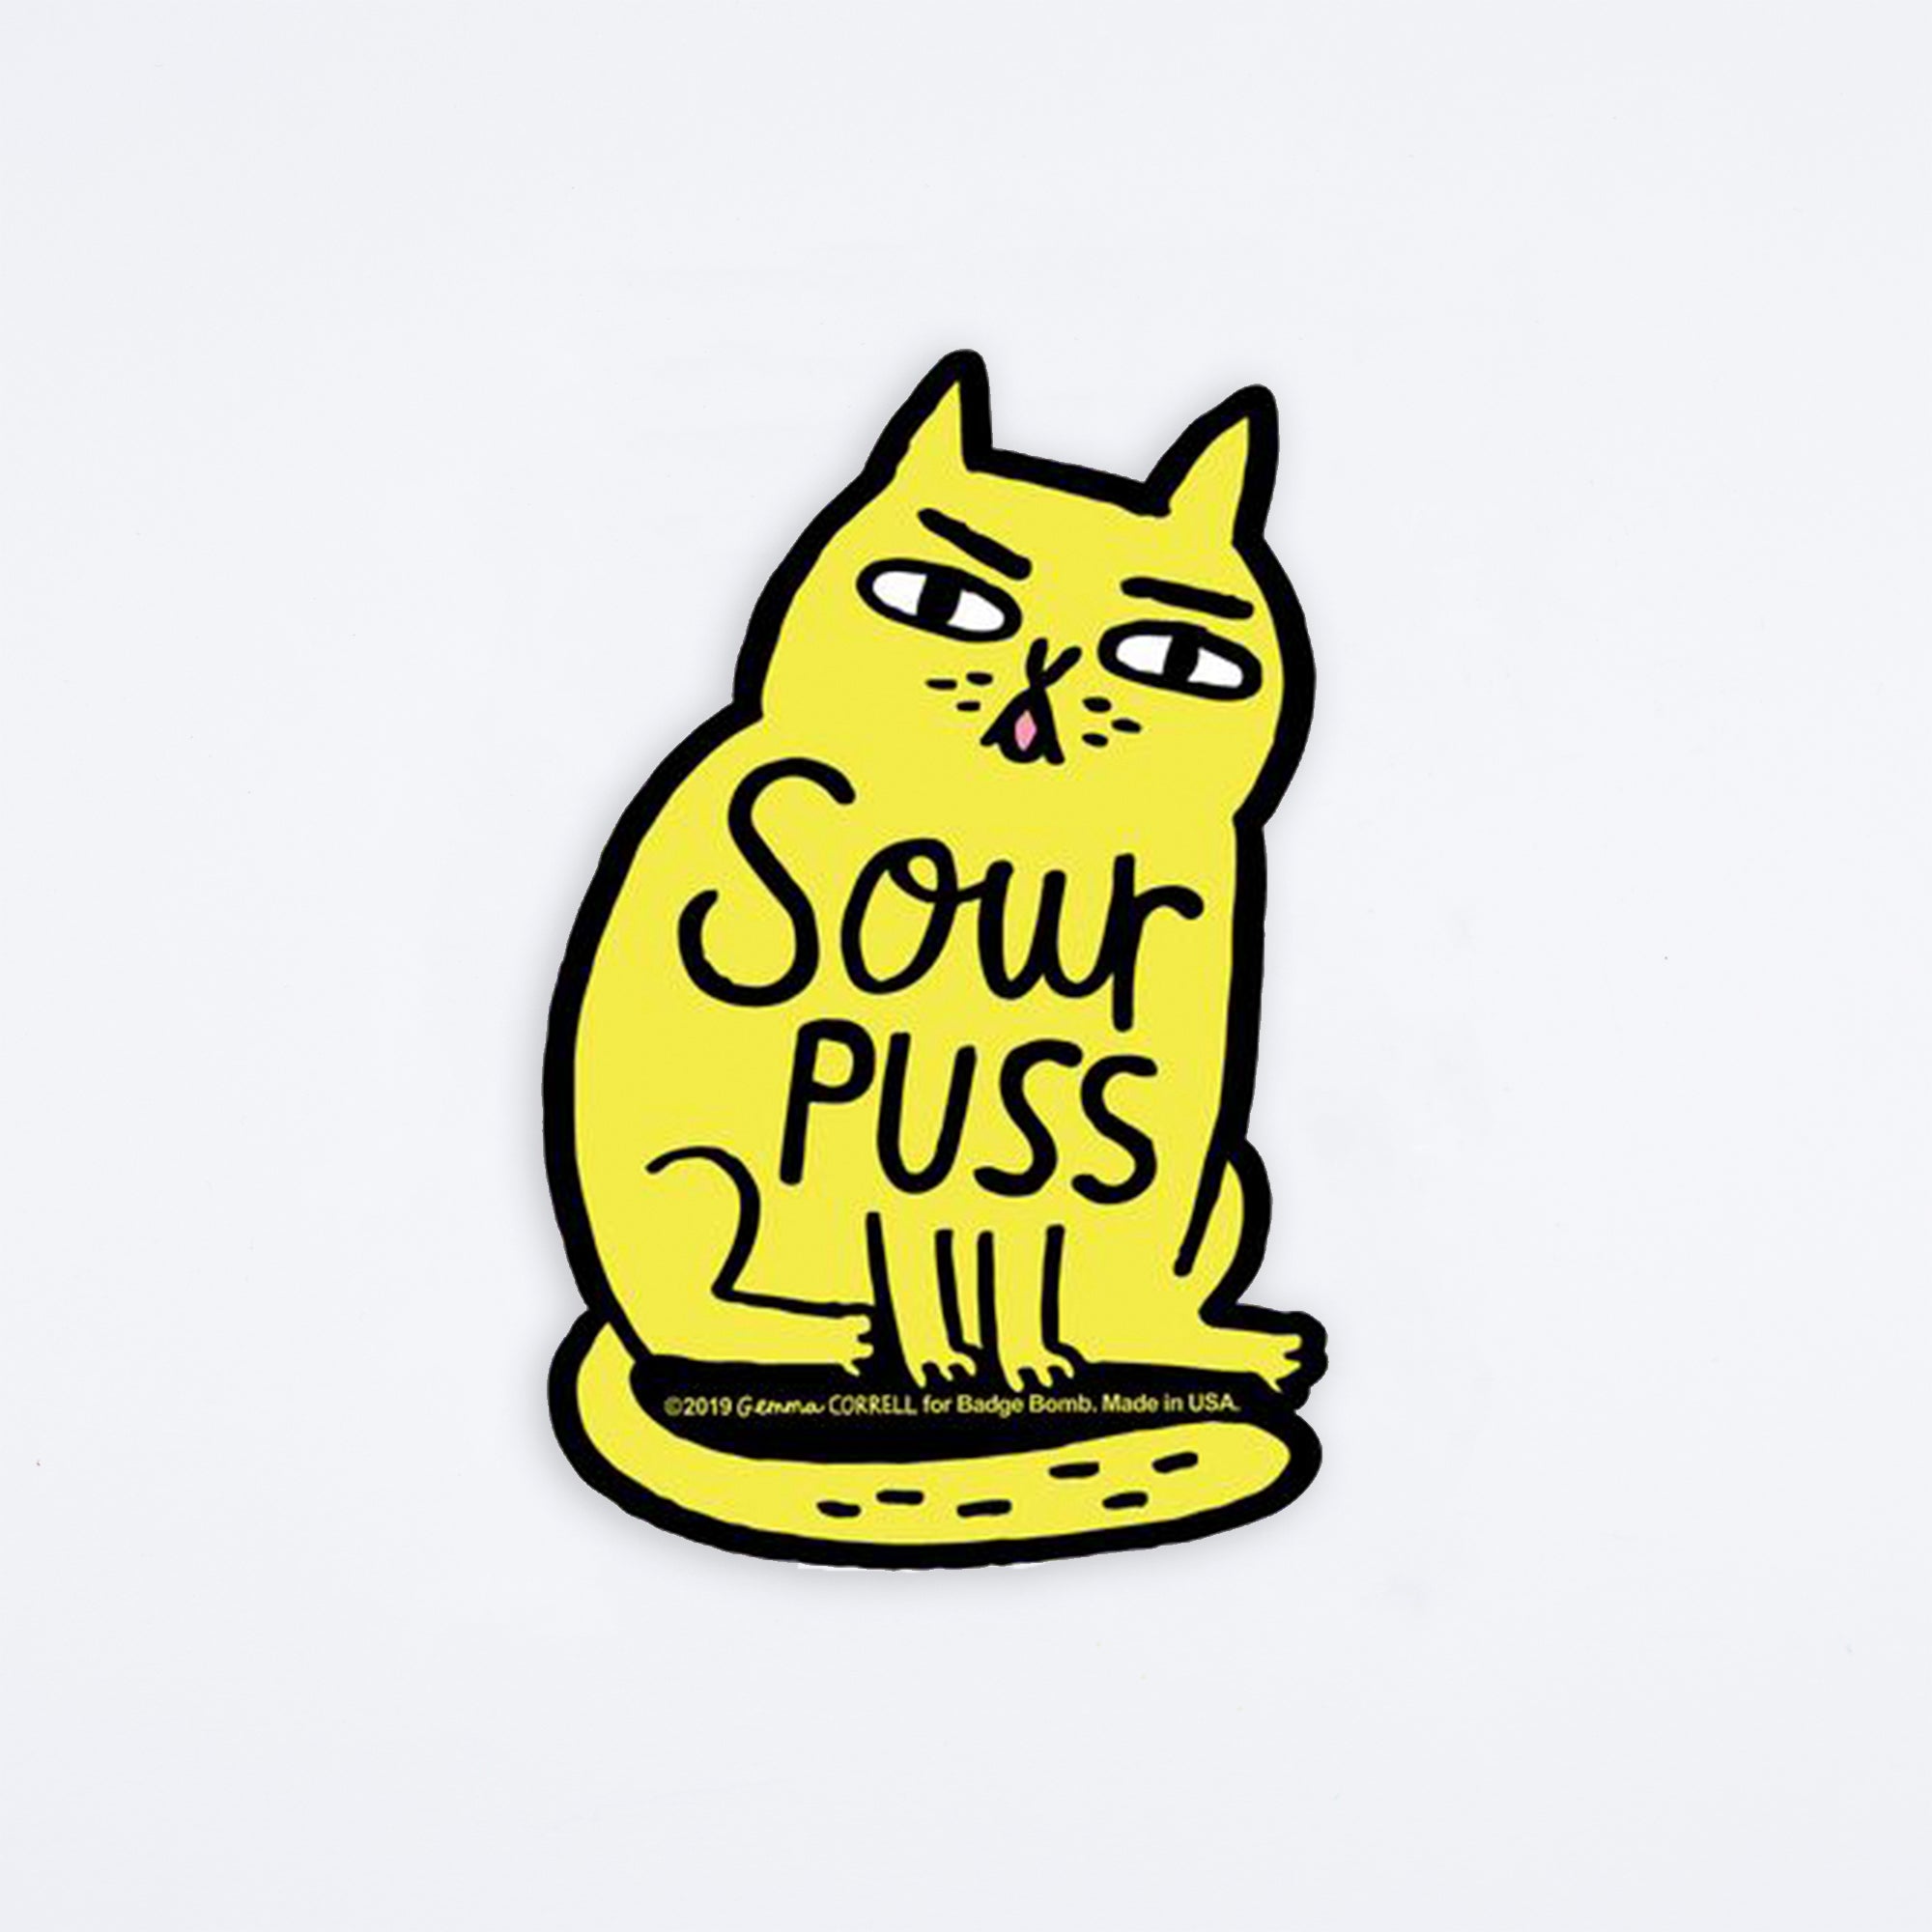 Sourpuss Sticker